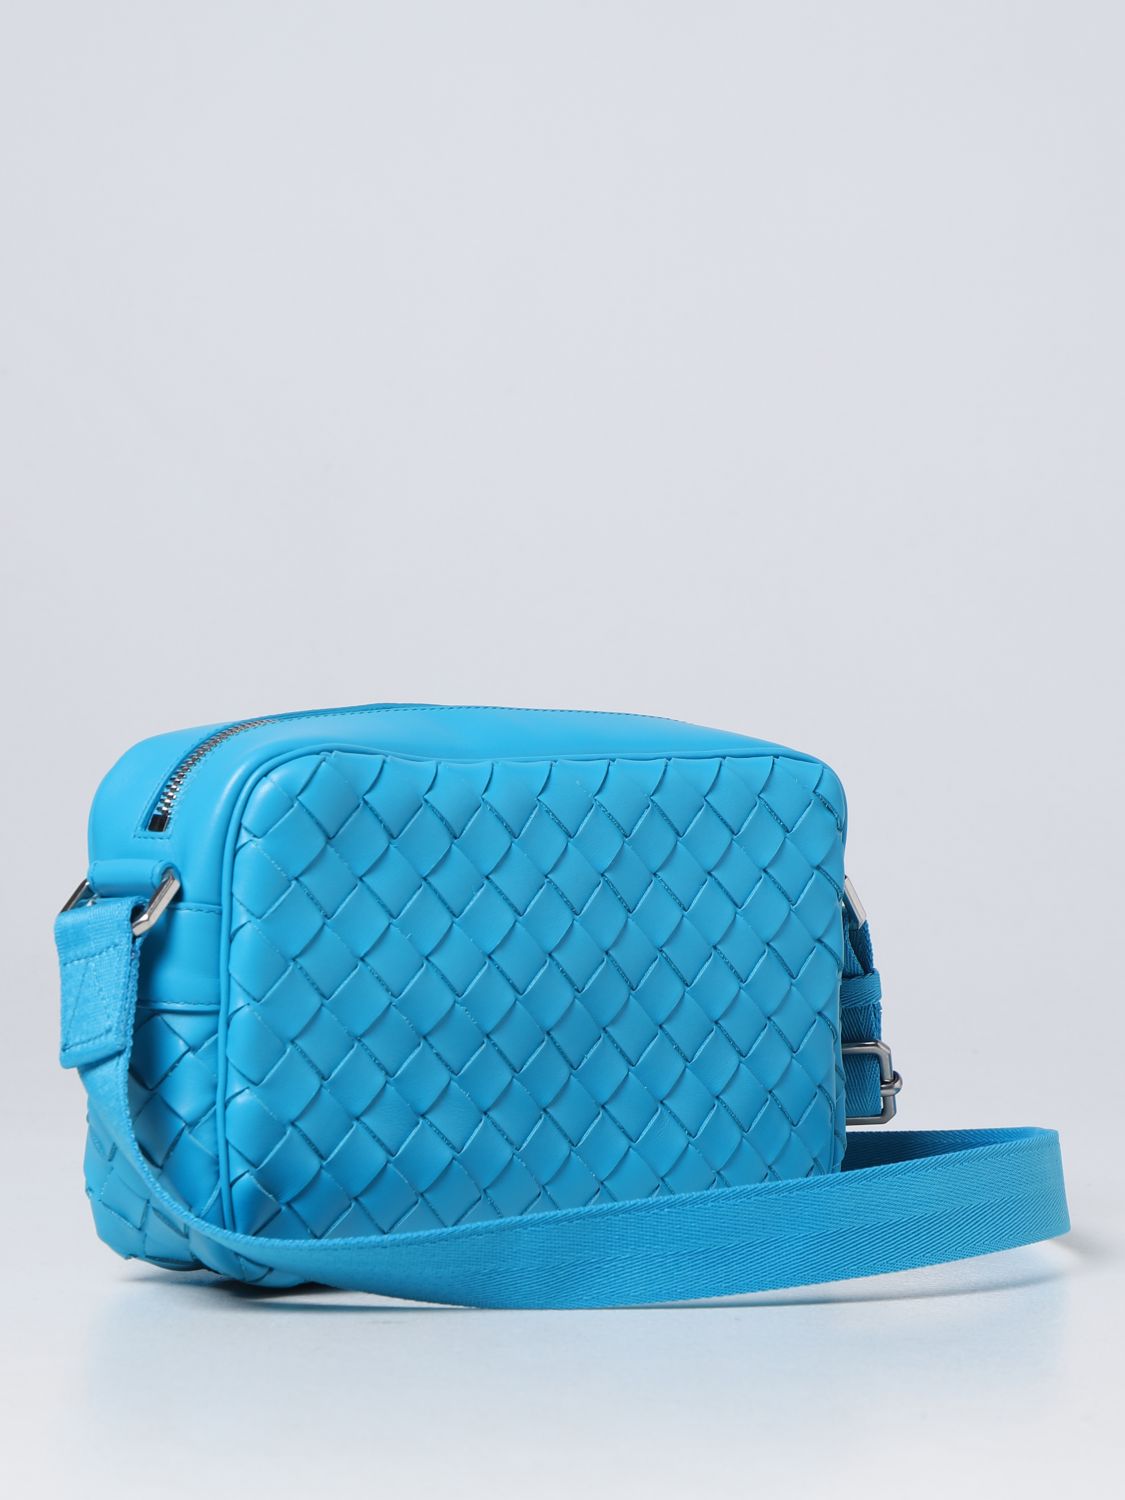 Bottega Veneta Outlet: bag in woven leather - Beige  Bottega Veneta  shoulder bag 710048V2E42 online at